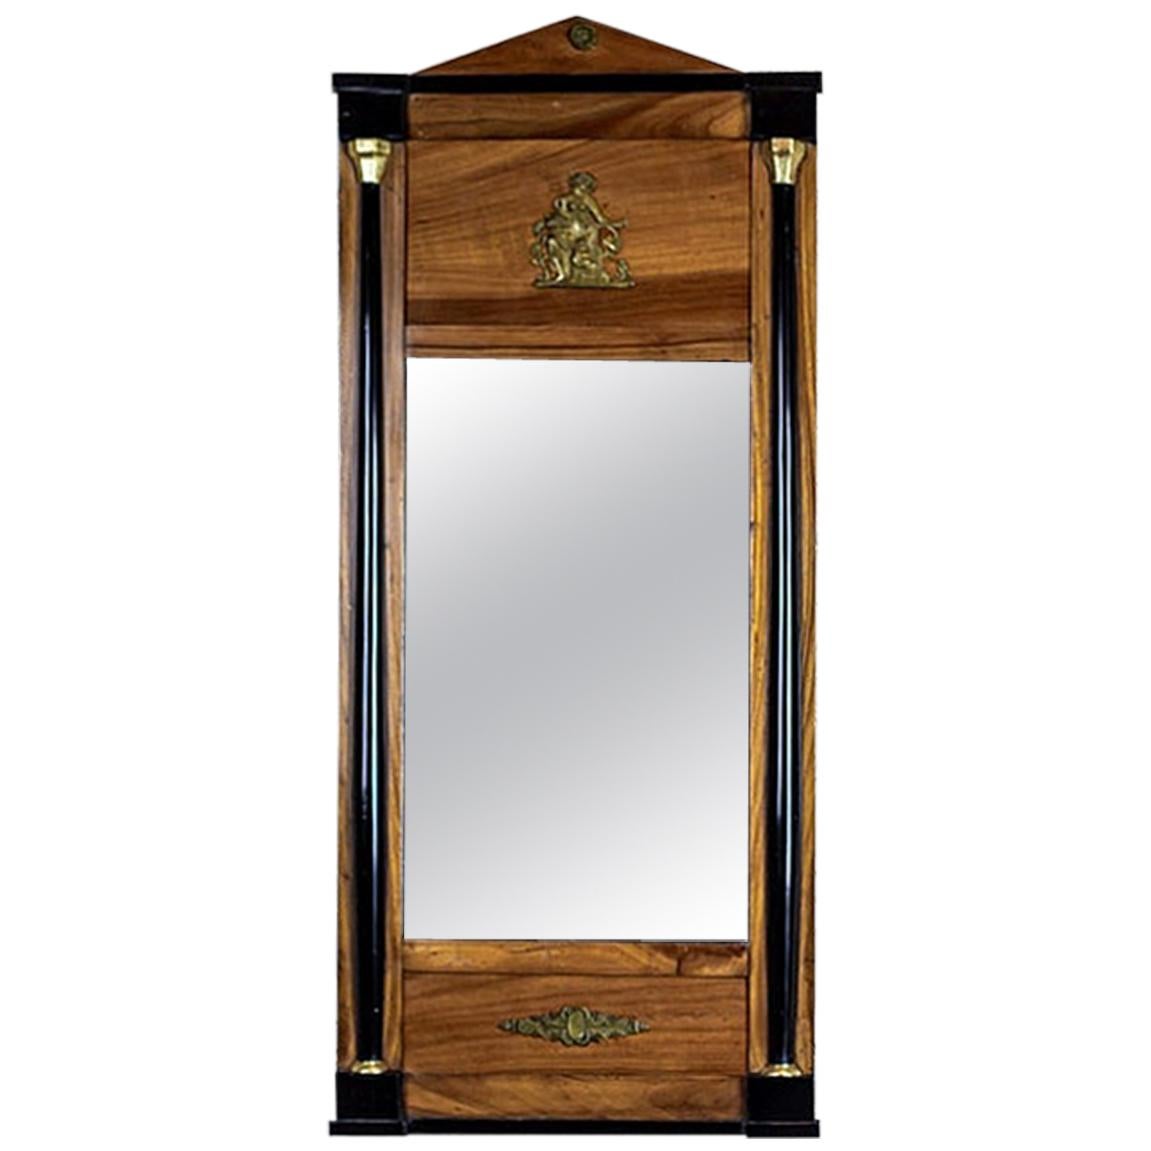 19th Century Empire Mirror with Brass Elements